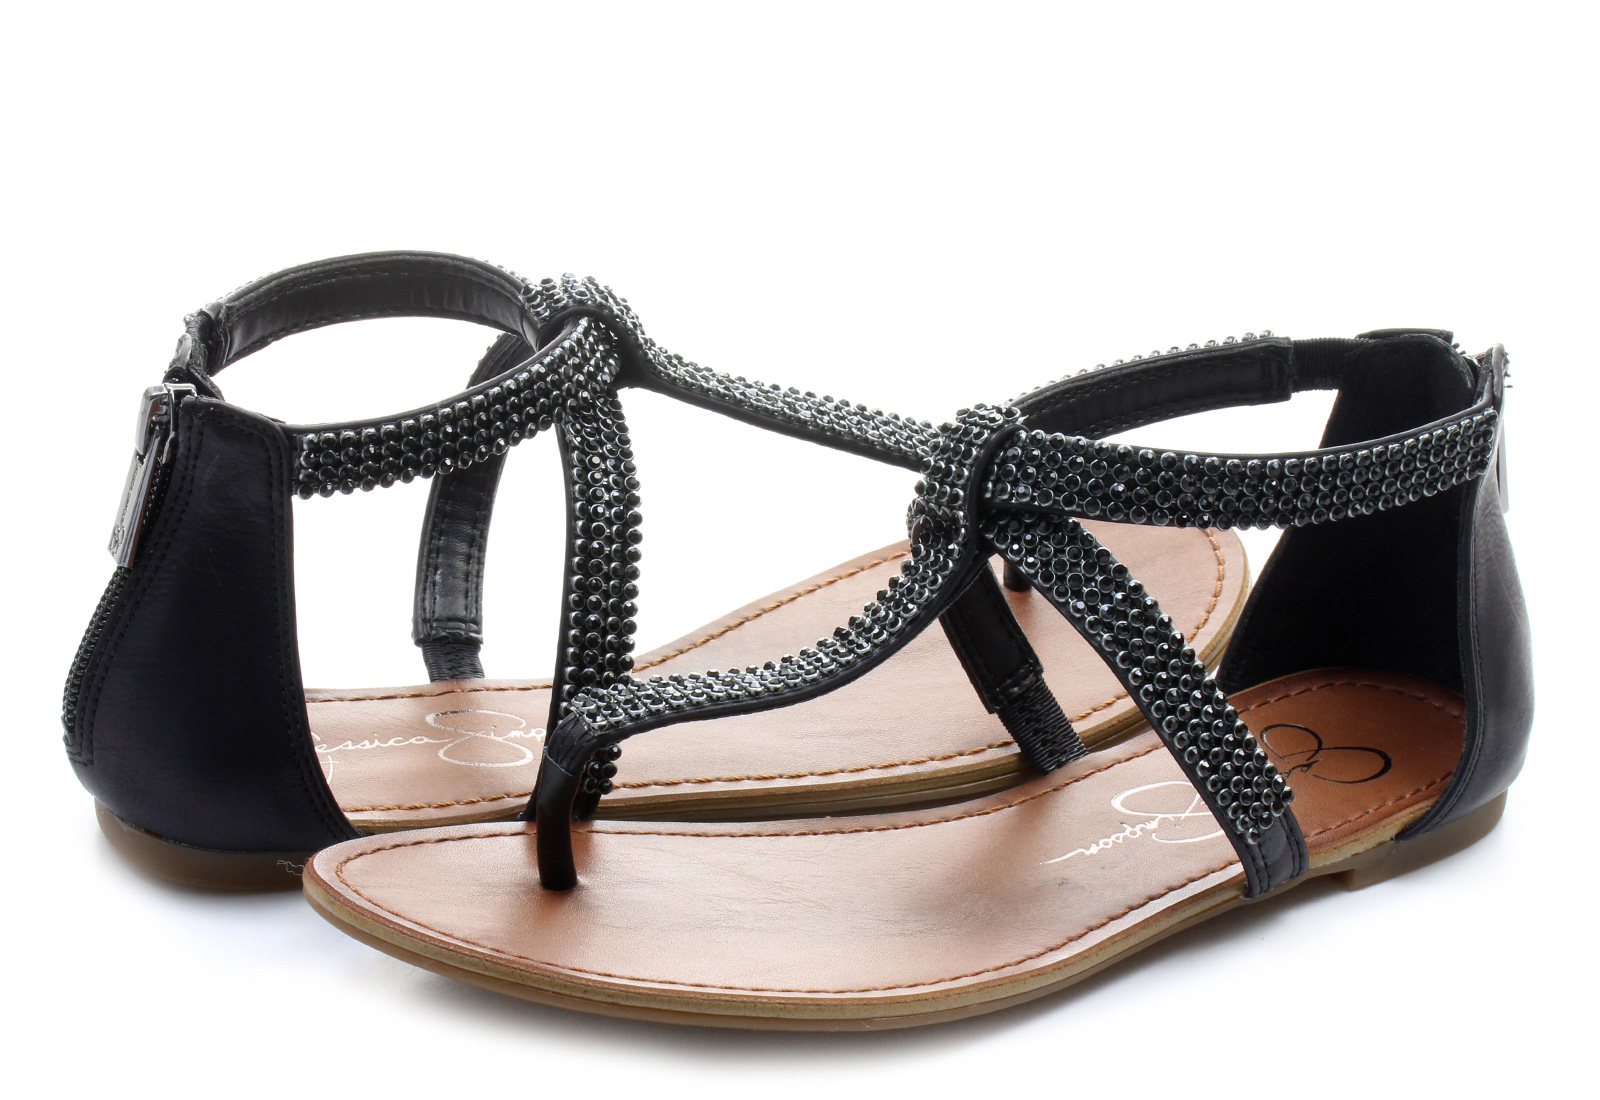 Jessica Simpson Sandals - Garreth Black - garreth-blk - Online shop for sneakers ...